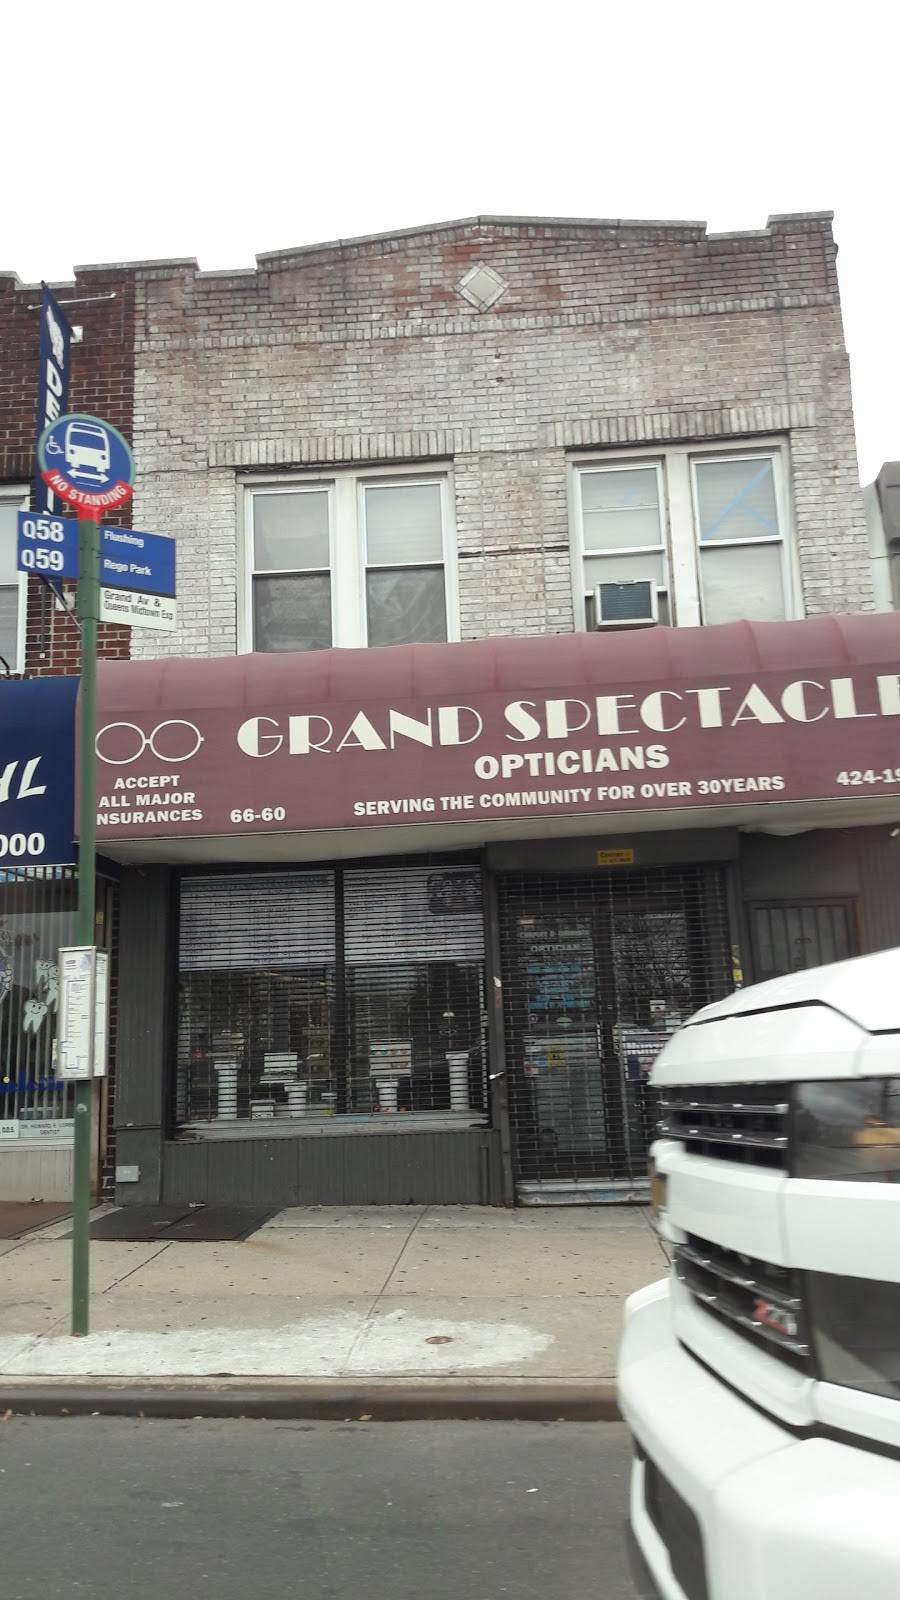 Grand Spectacle Opticians | 66-60 Grand Ave, Flushing, NY 11378 | Phone: (718) 424-1924